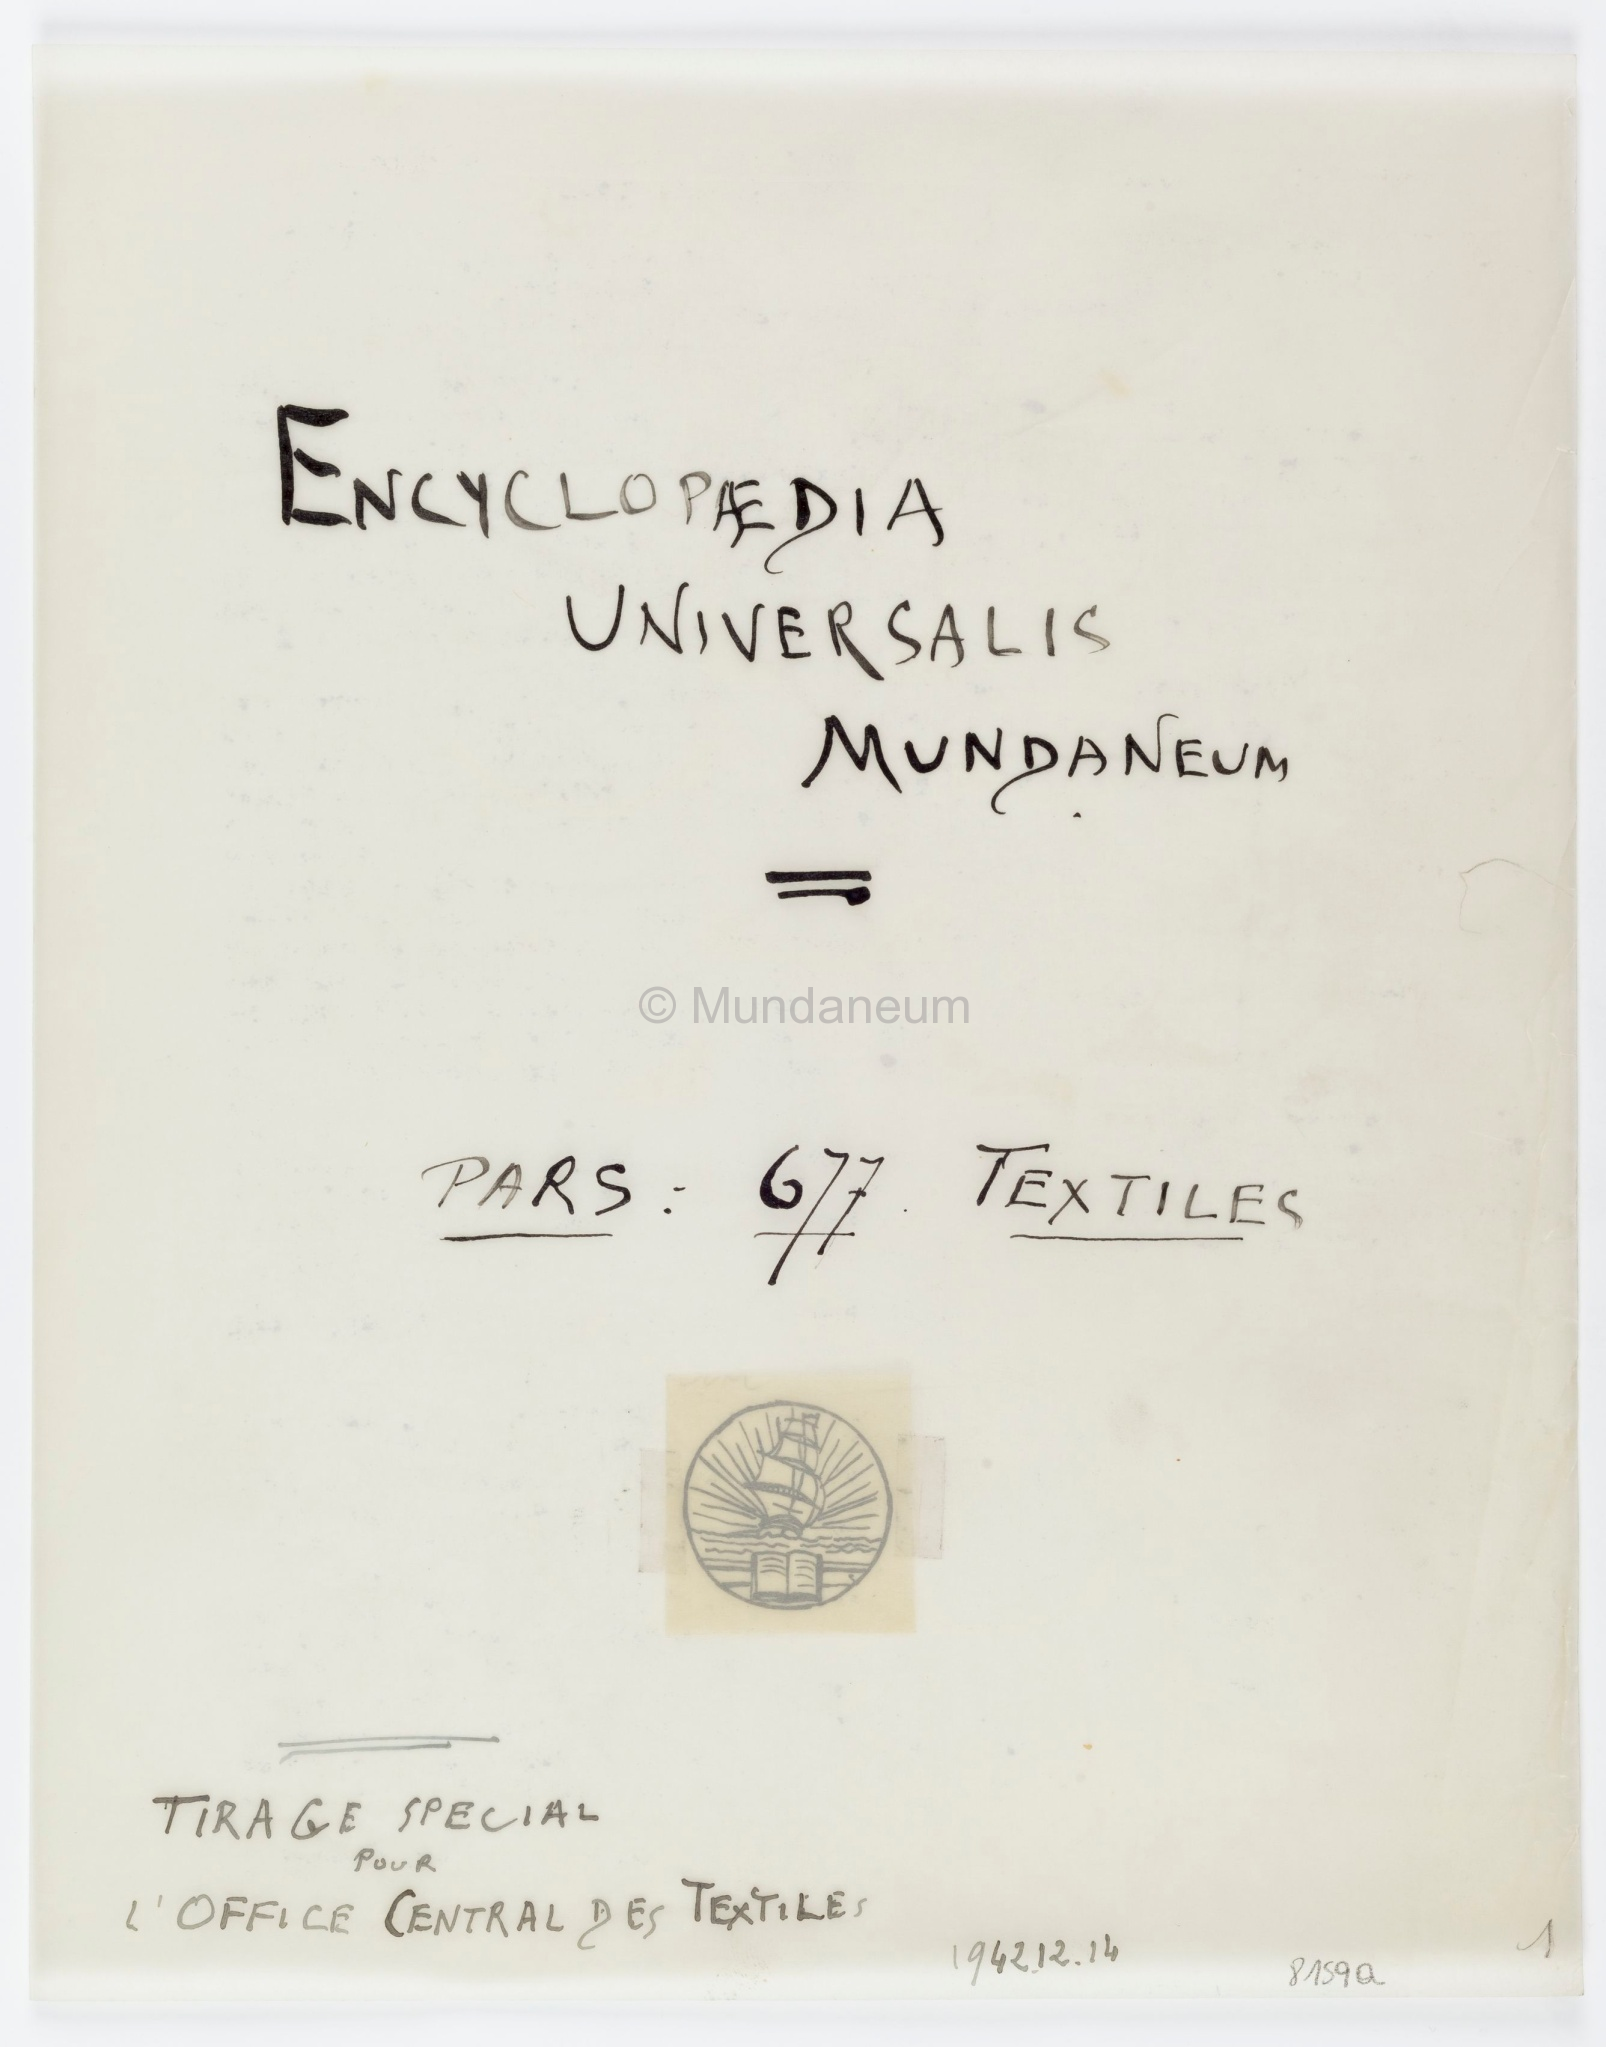 Encyclopaedia Universalis Mundaneum: Textiles